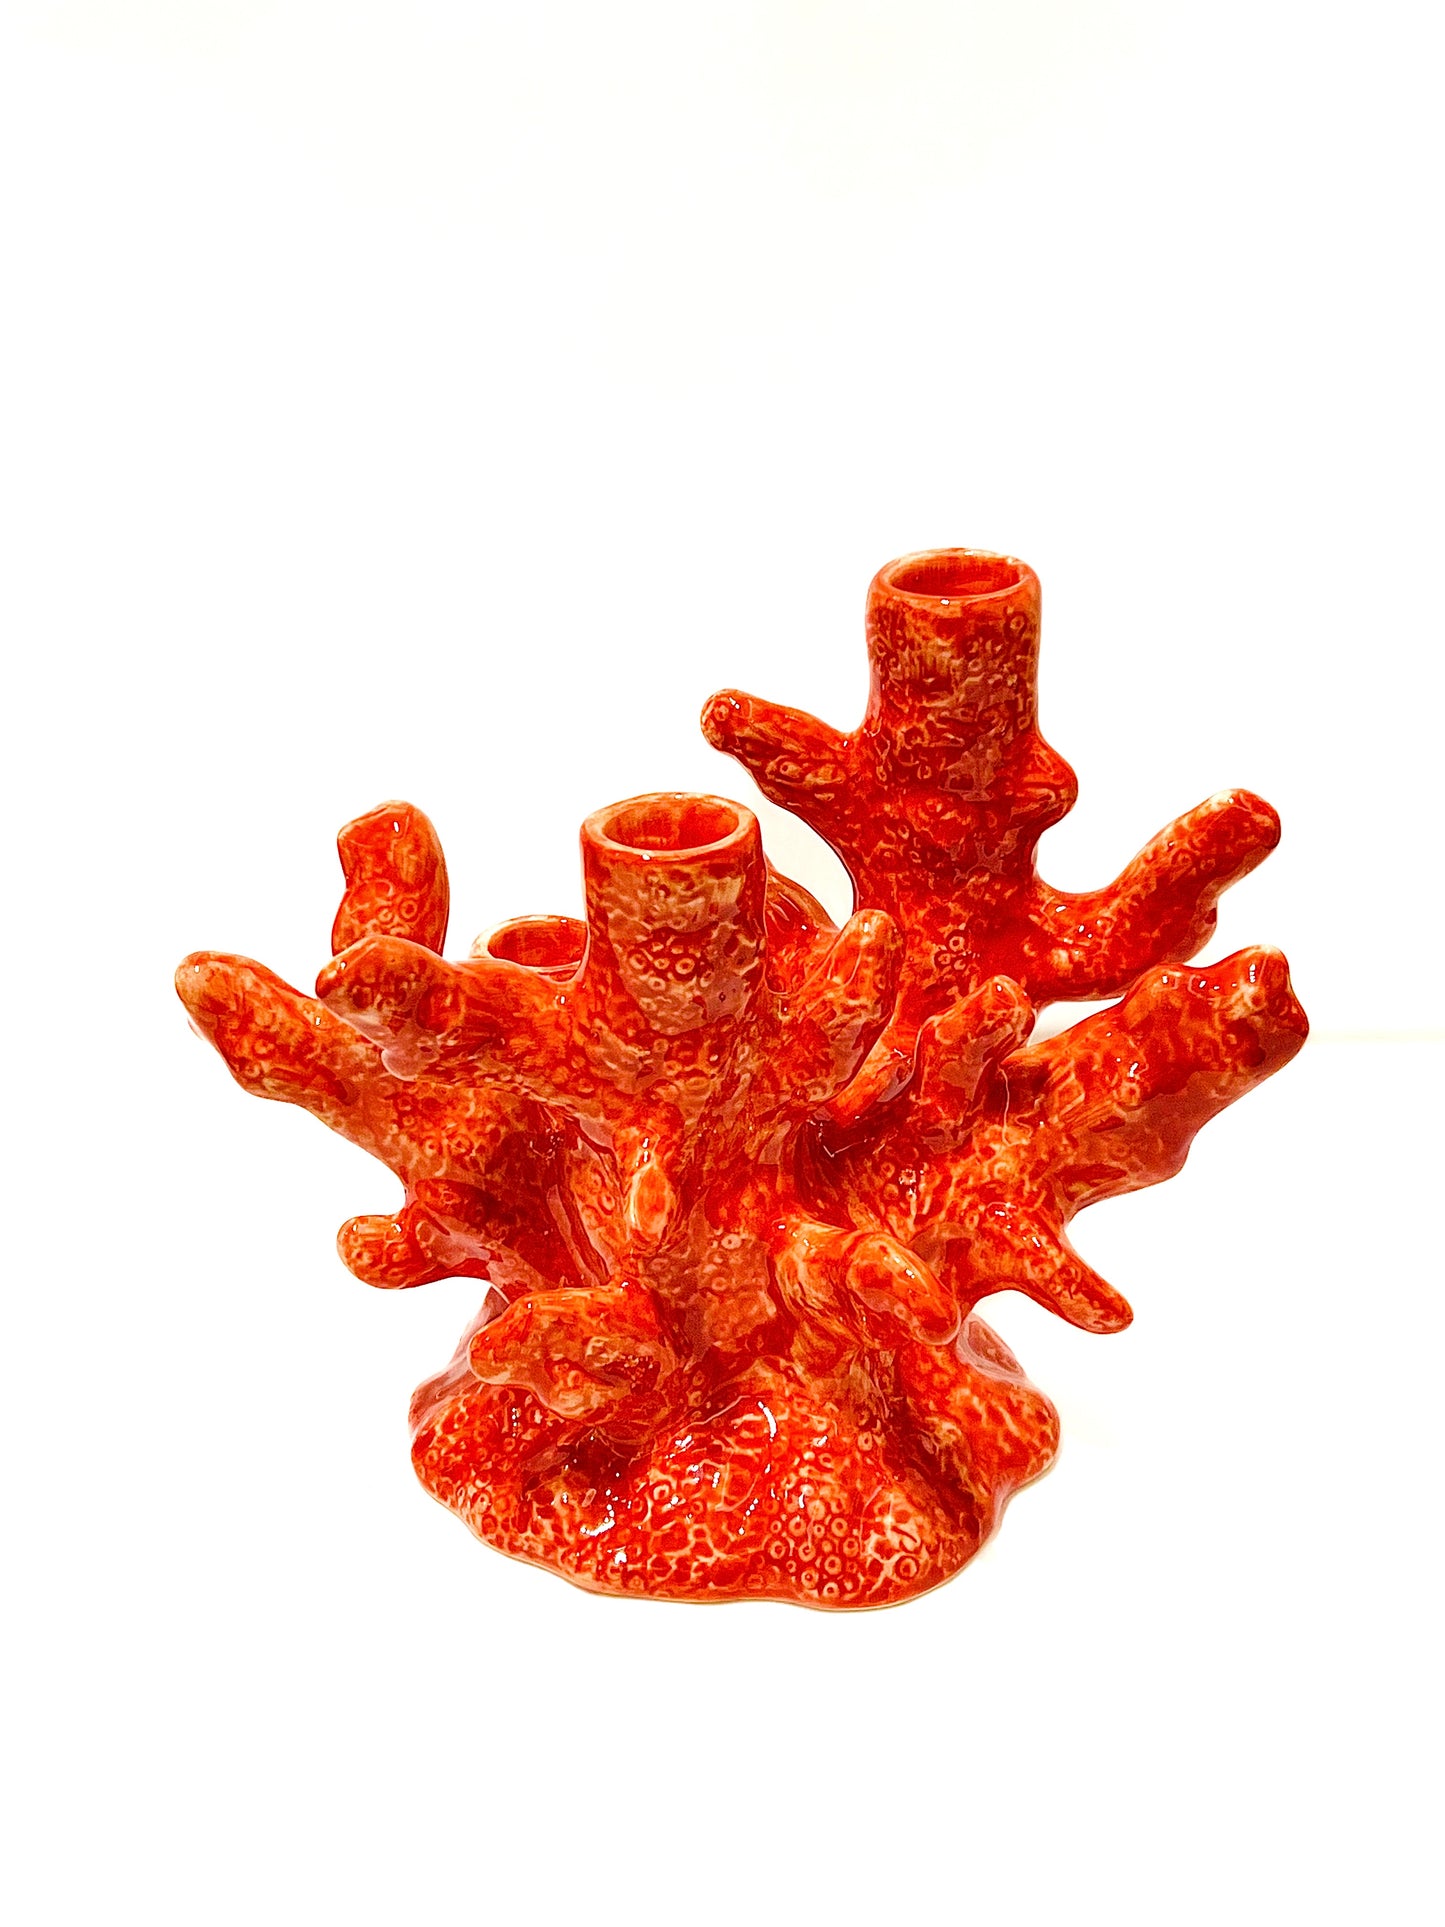 Candelabro Coral Rojo 3 brazos